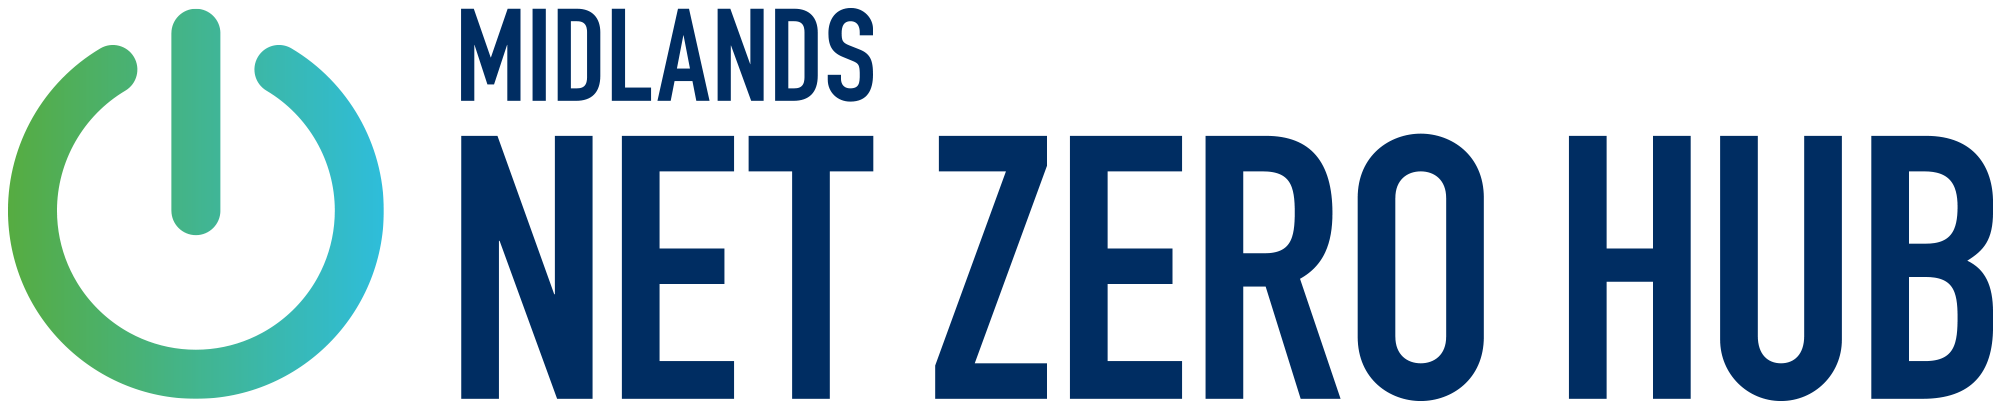 midlands net zero hub logo 